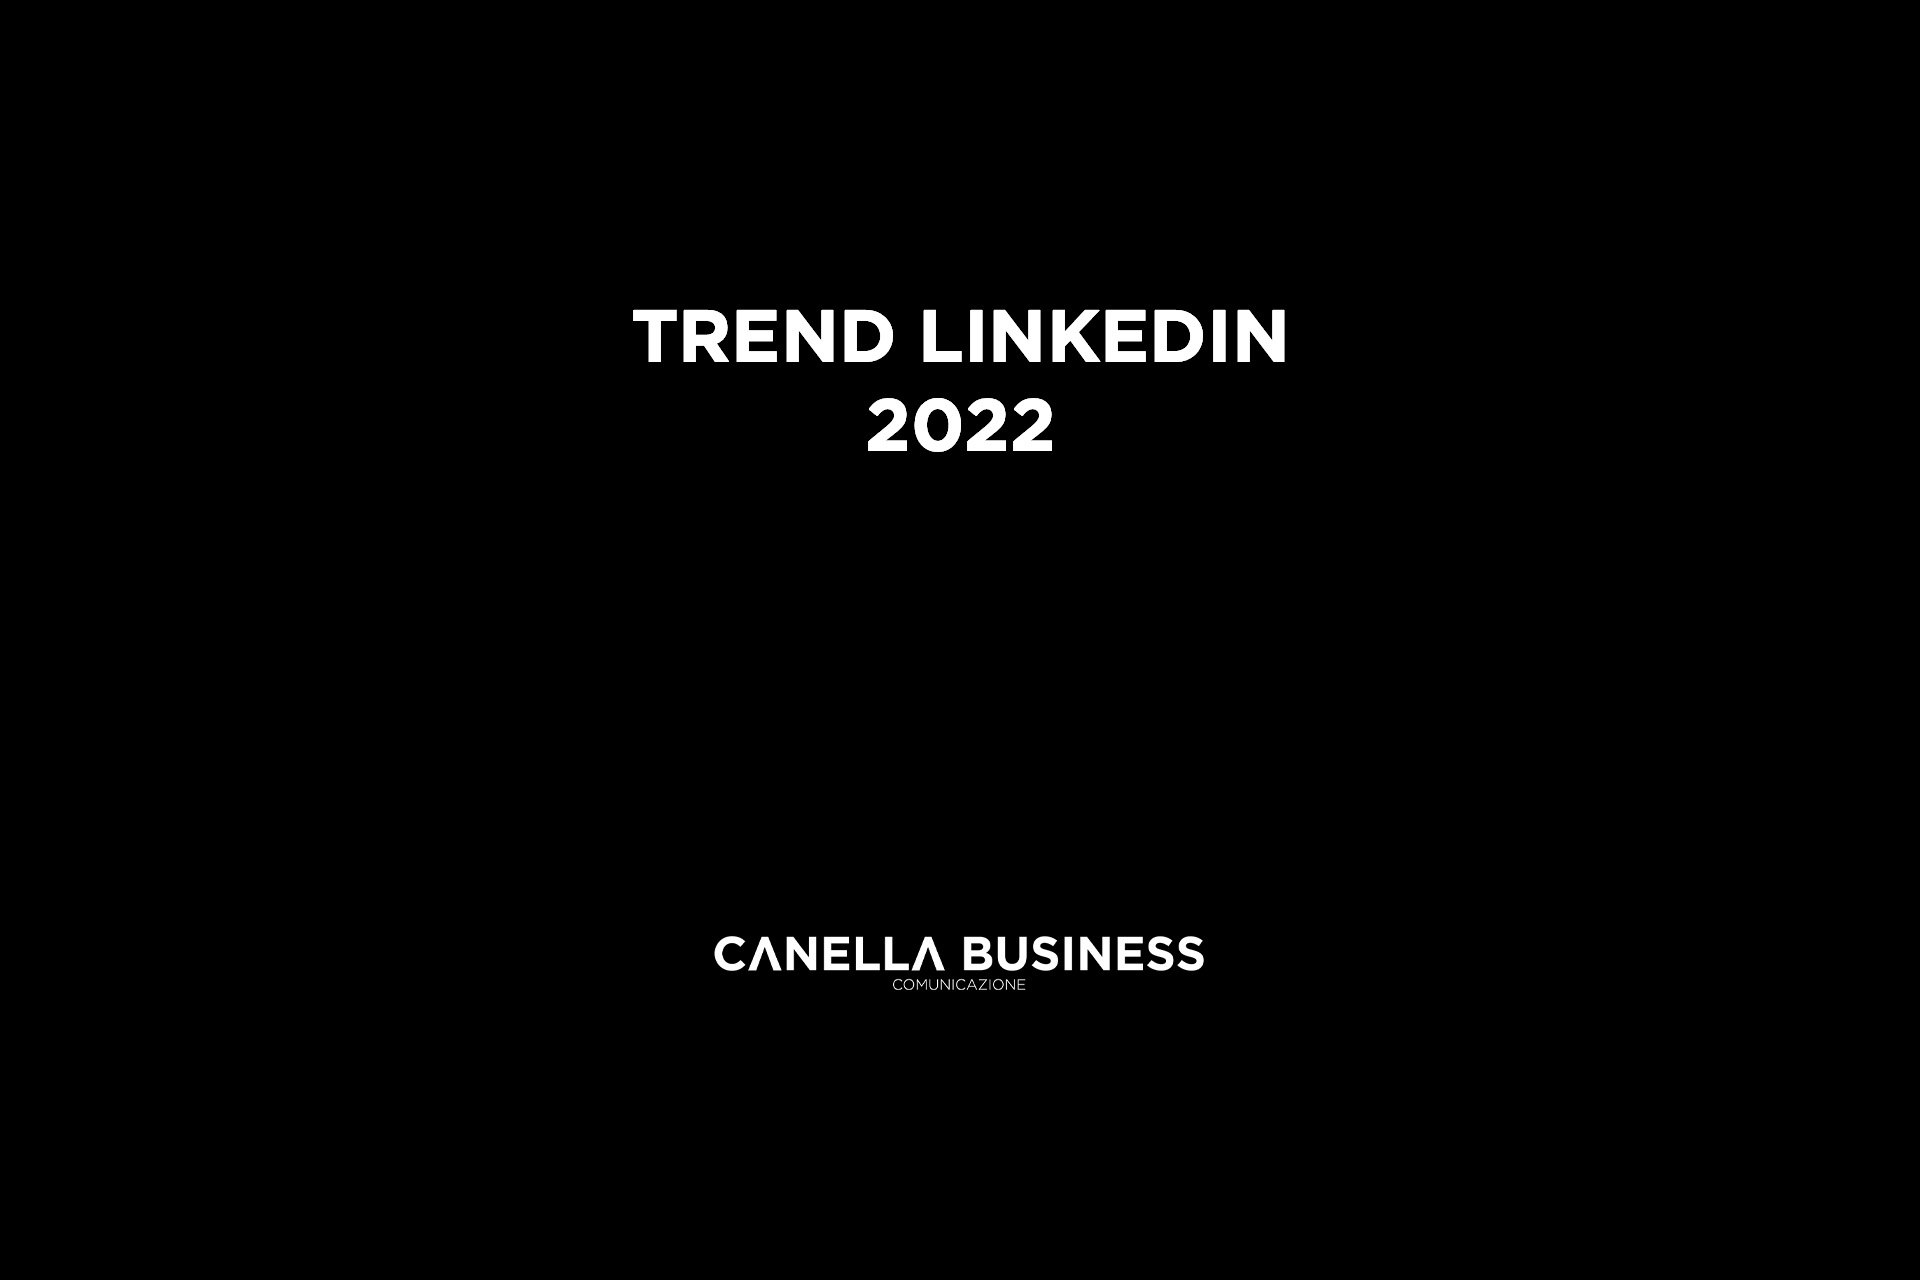 Trend LinkedIn 2022